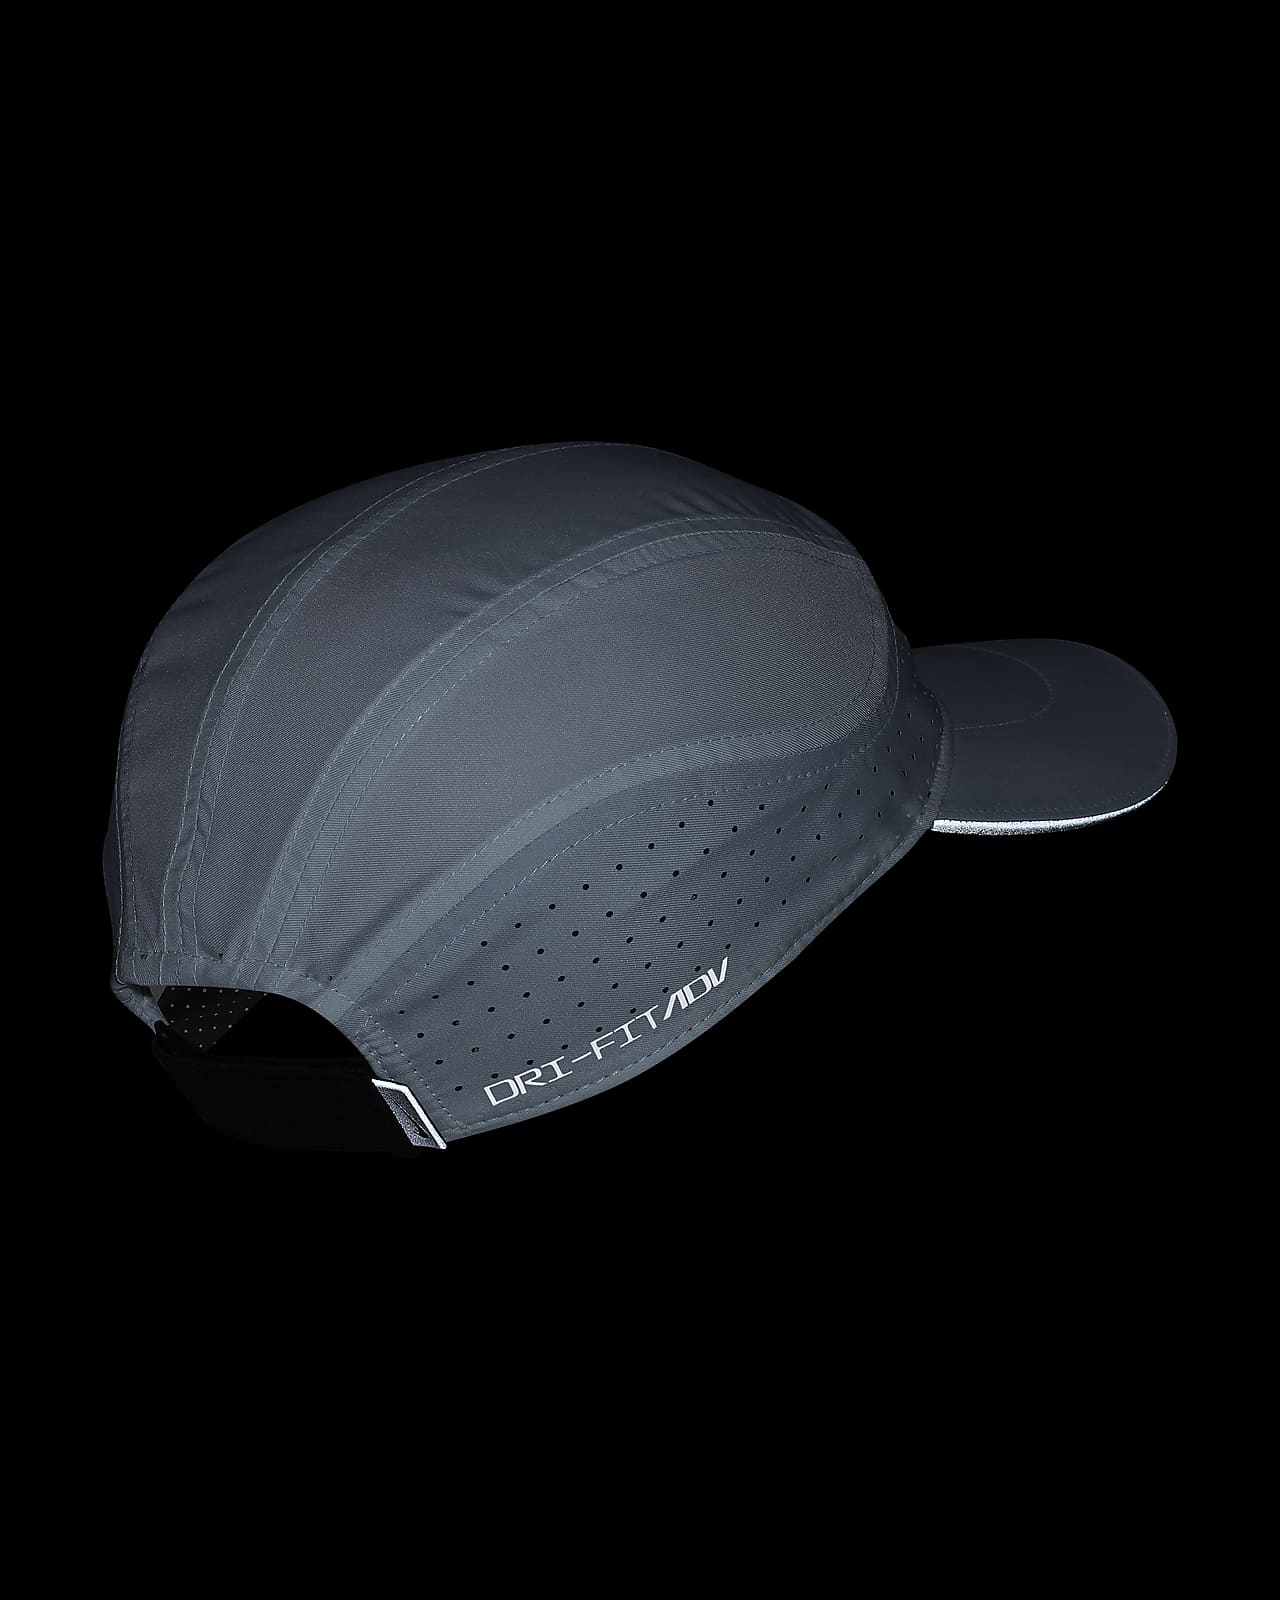  Nike AeroBill Tailwind Elite Cap Black One Size